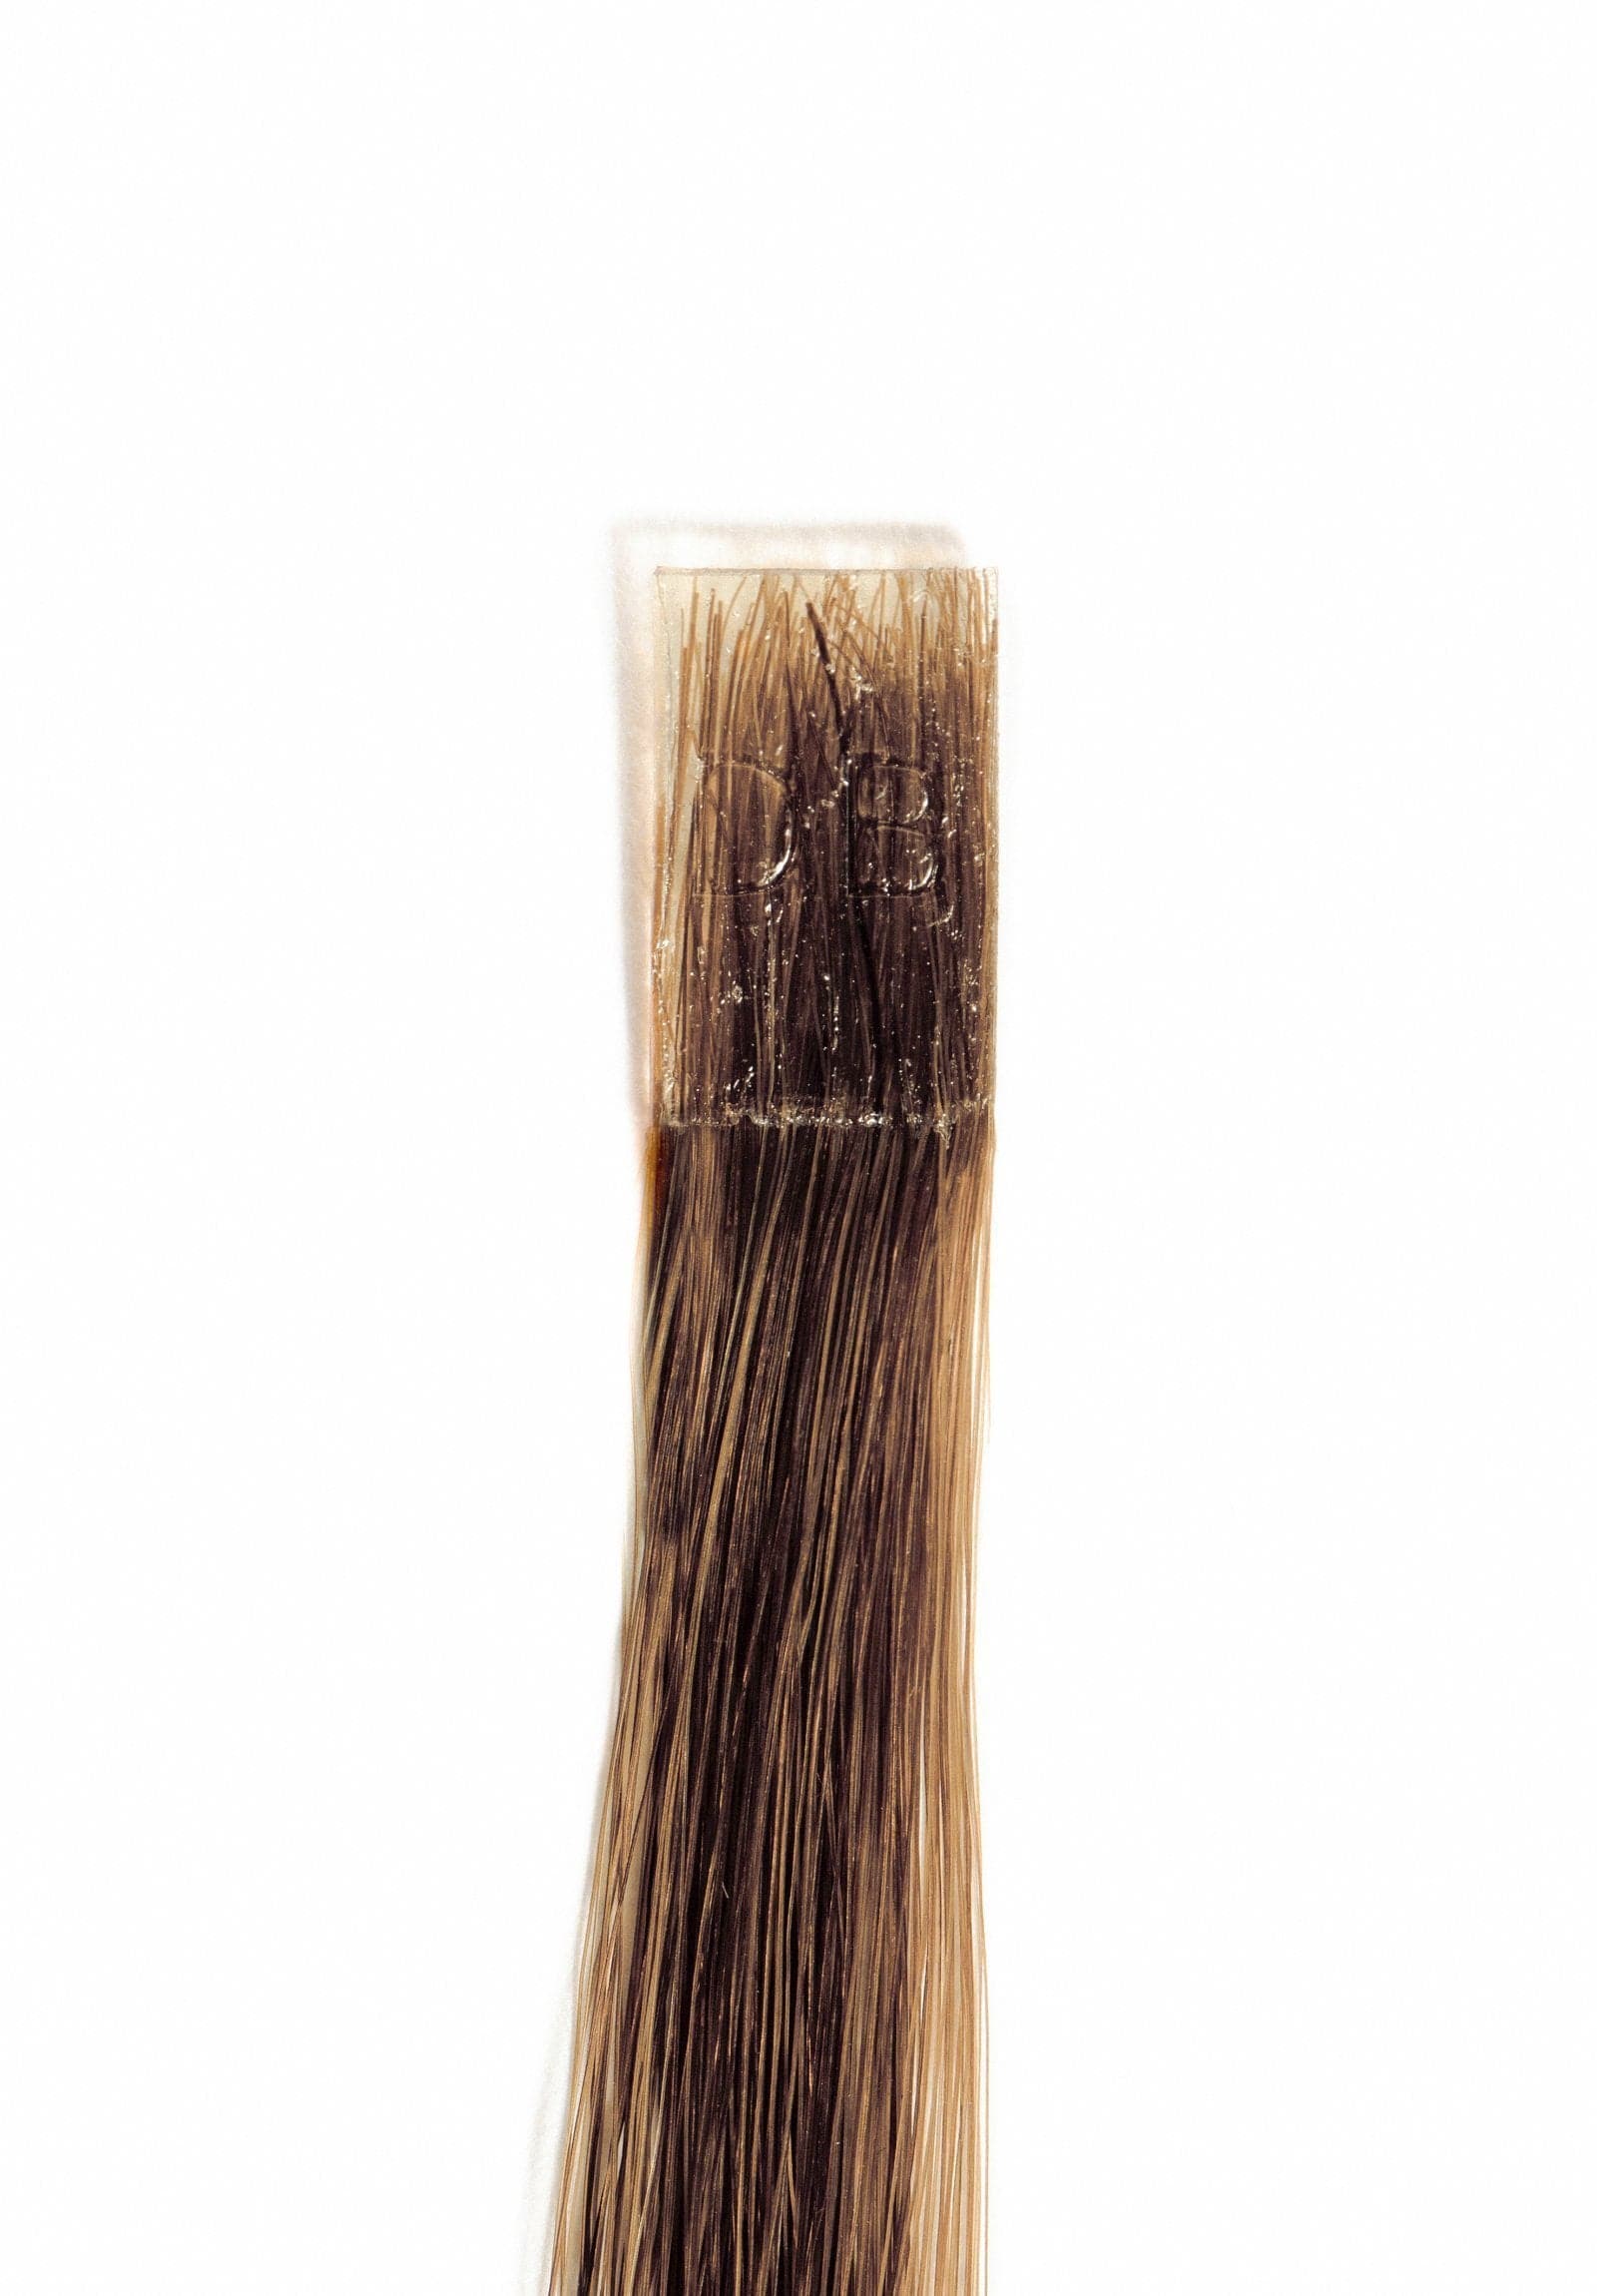 16" Kera-Link Straight #8 (Light Chestnut Brown) - Donna Bella Hair